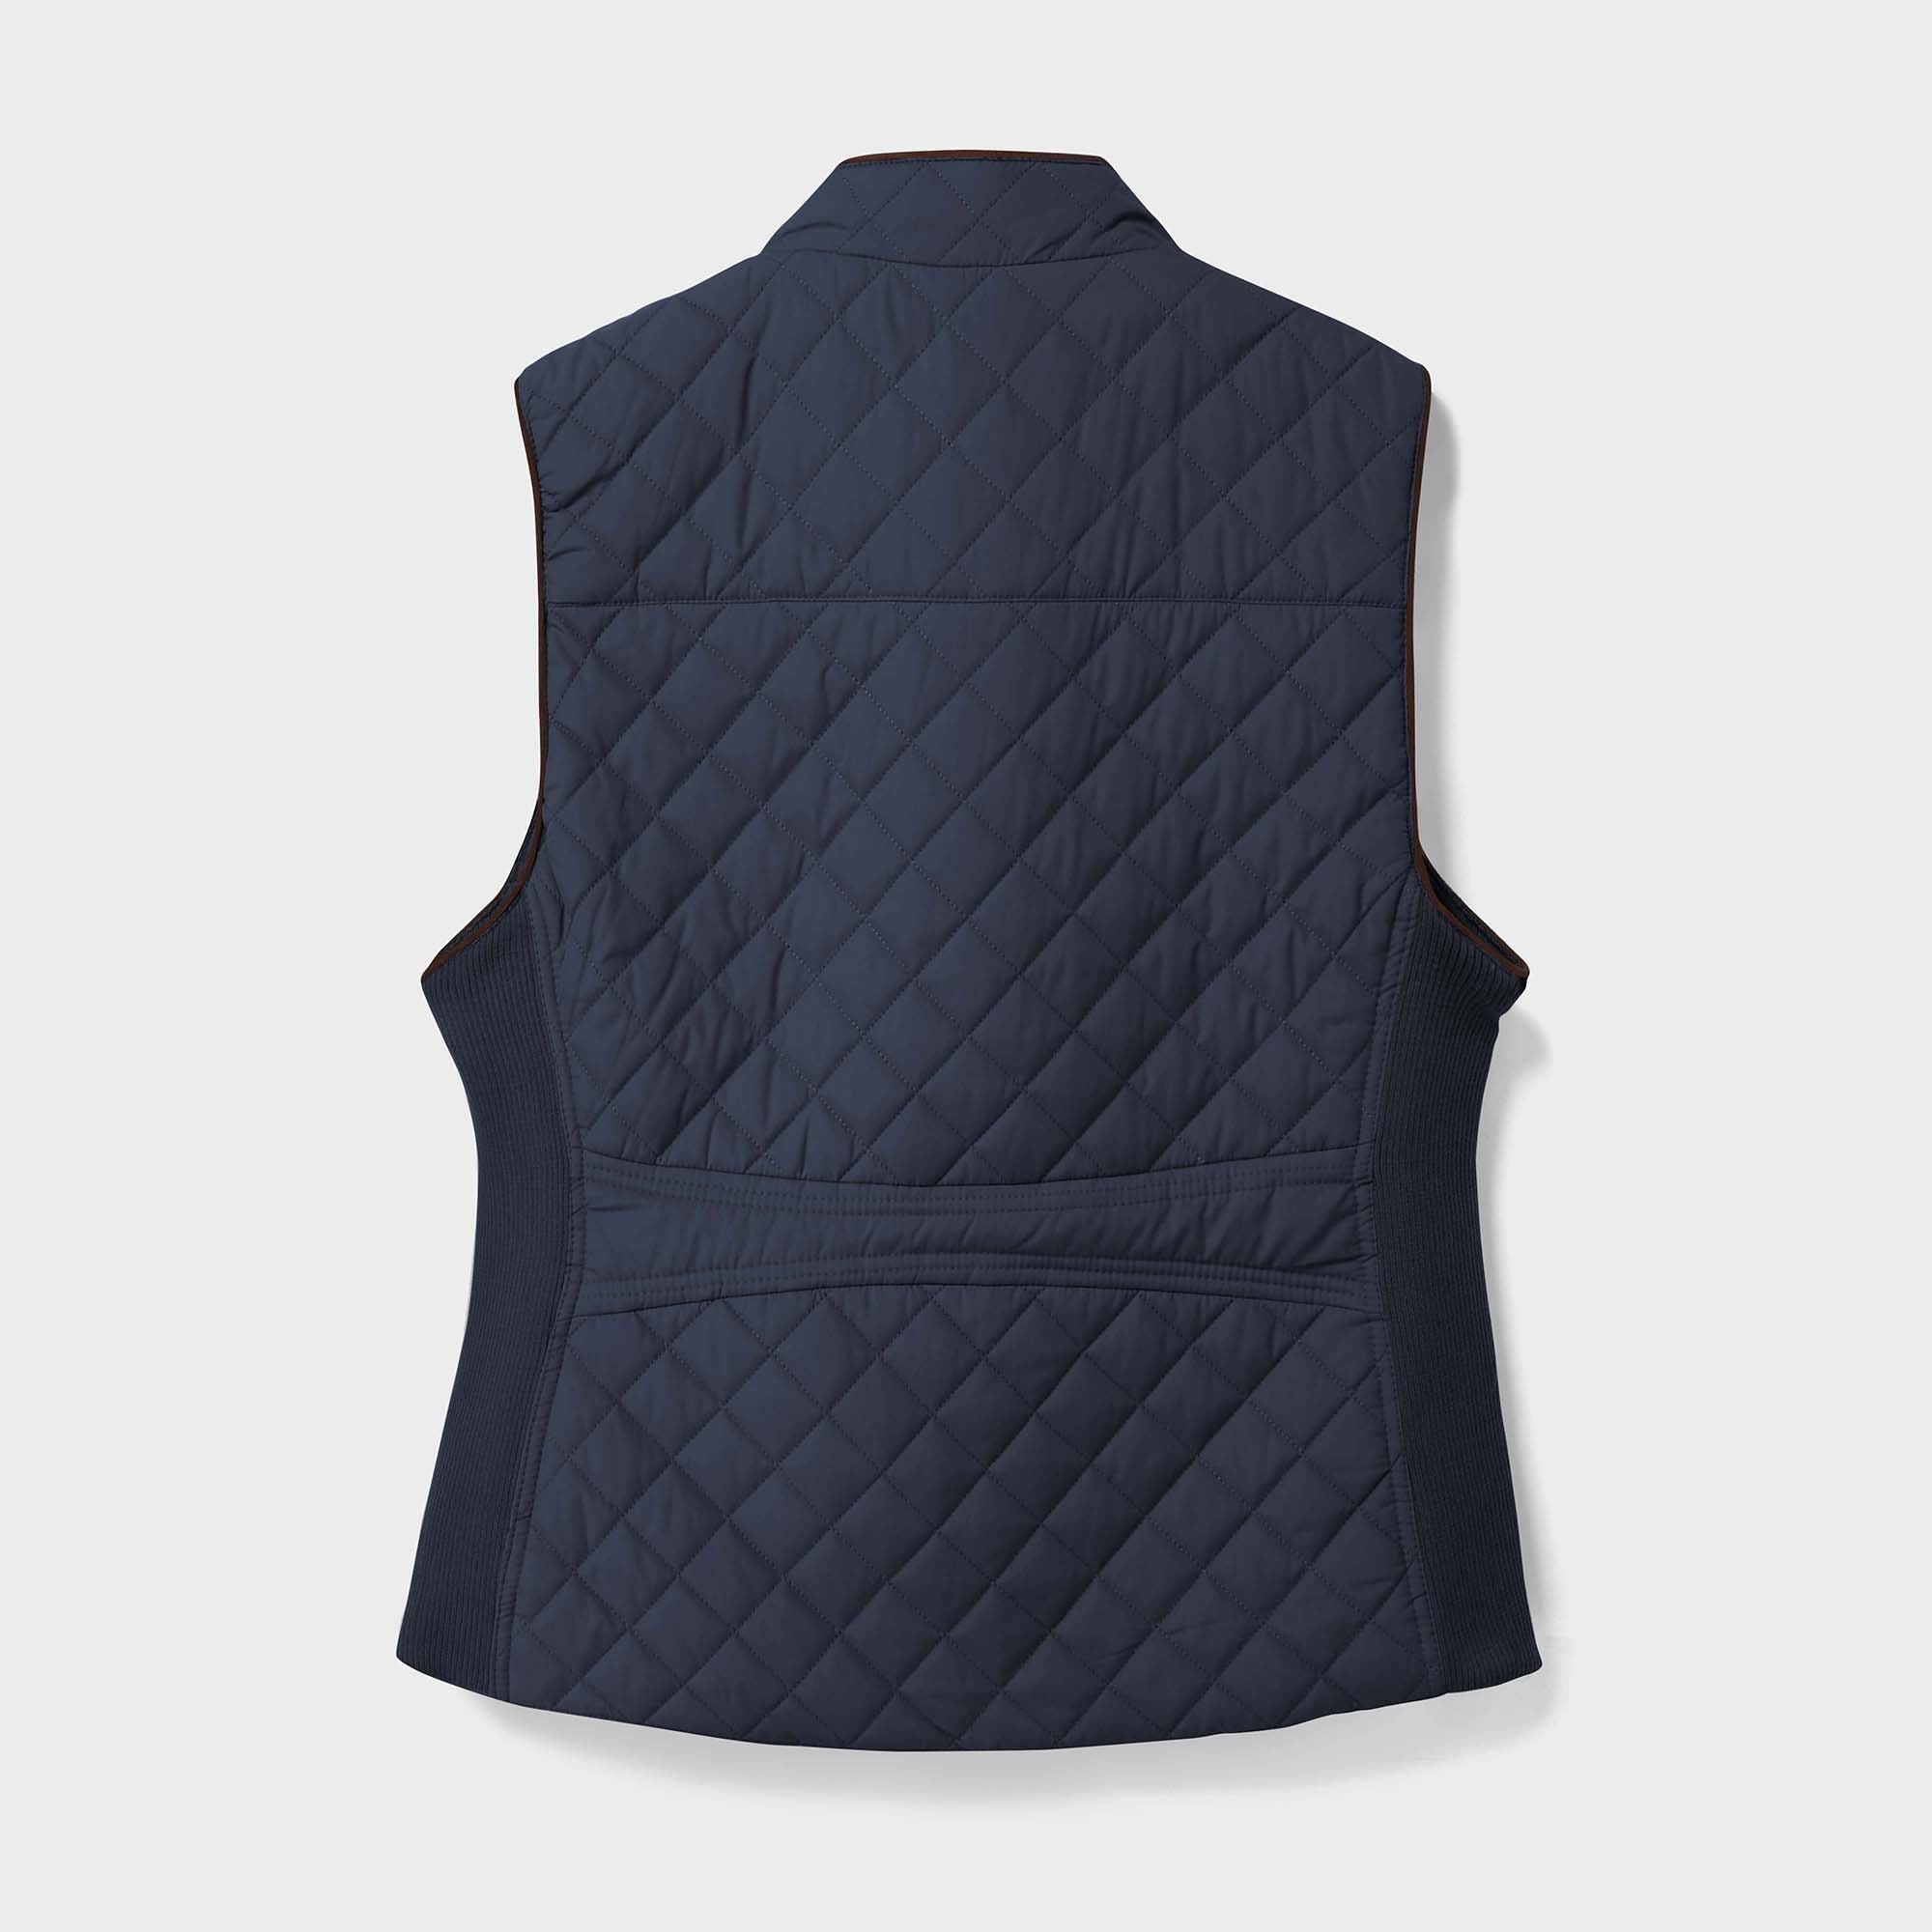 women vest_women puffer vest_sweater vest women_sweat vest for women_ladies vests_women's dressy vests_women fashion vest_Navy